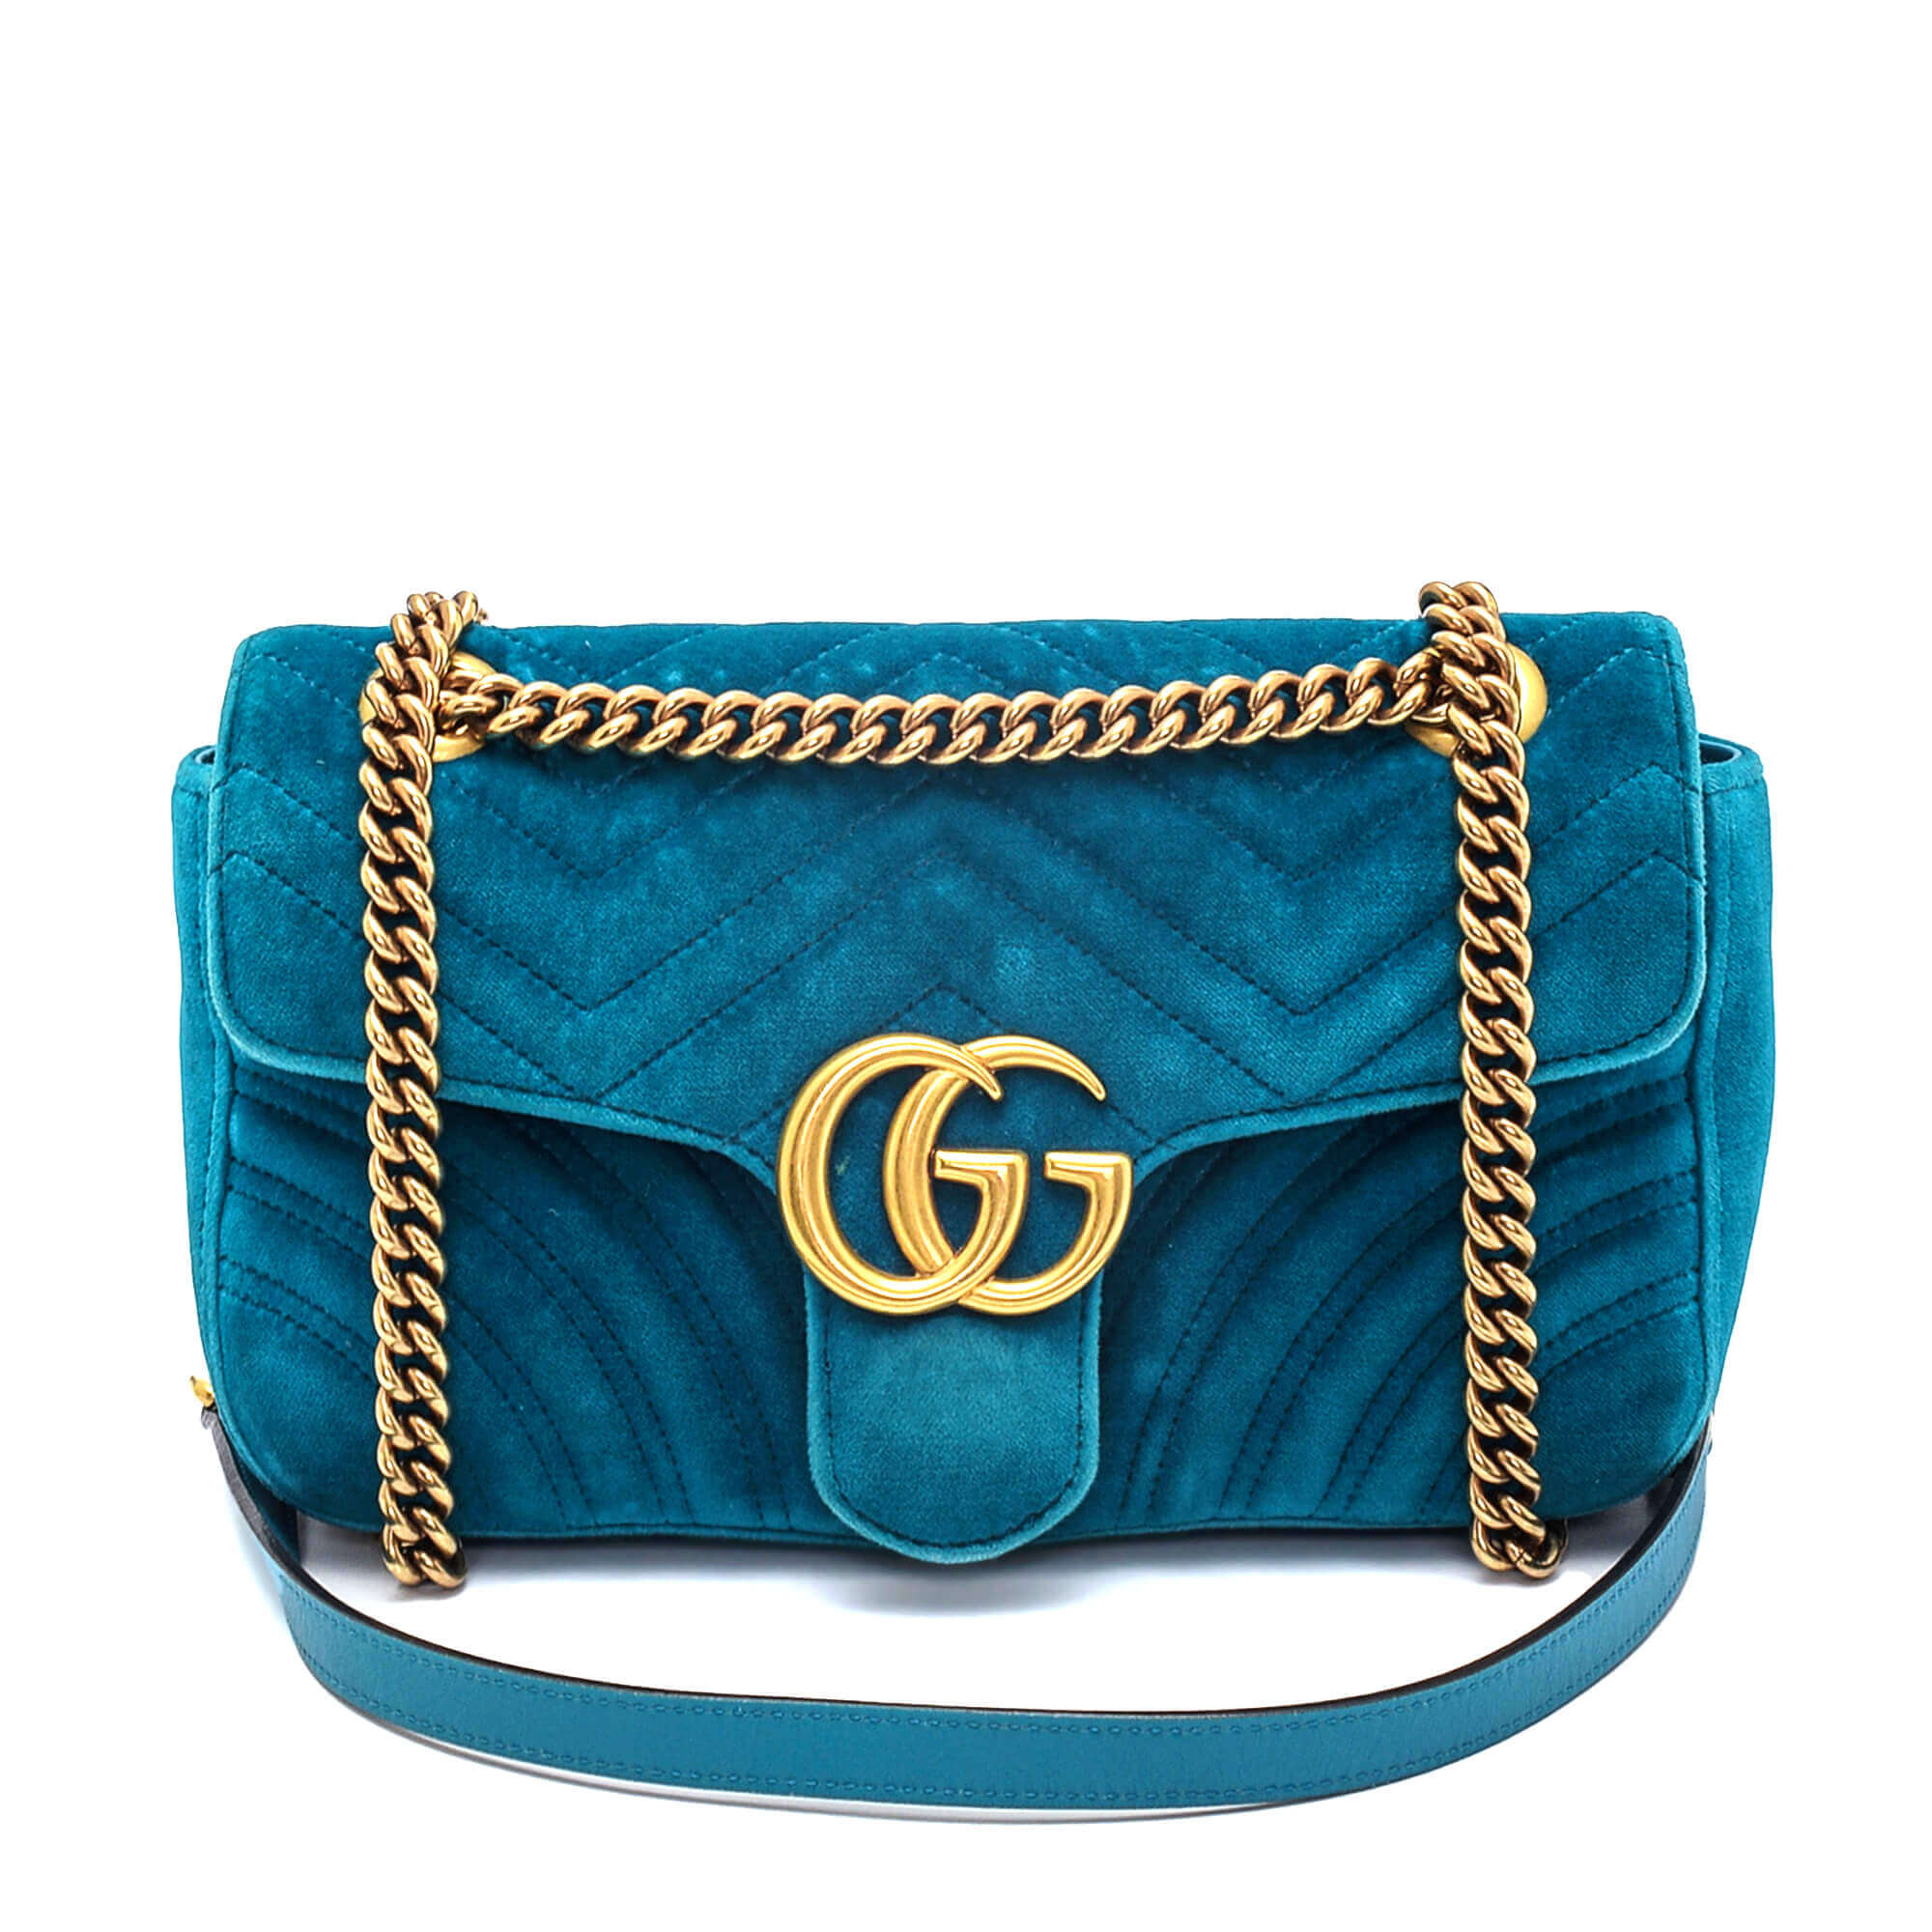 Gucci - Turquoise Velvet Matelasse GG Marmont Flap Small Bag